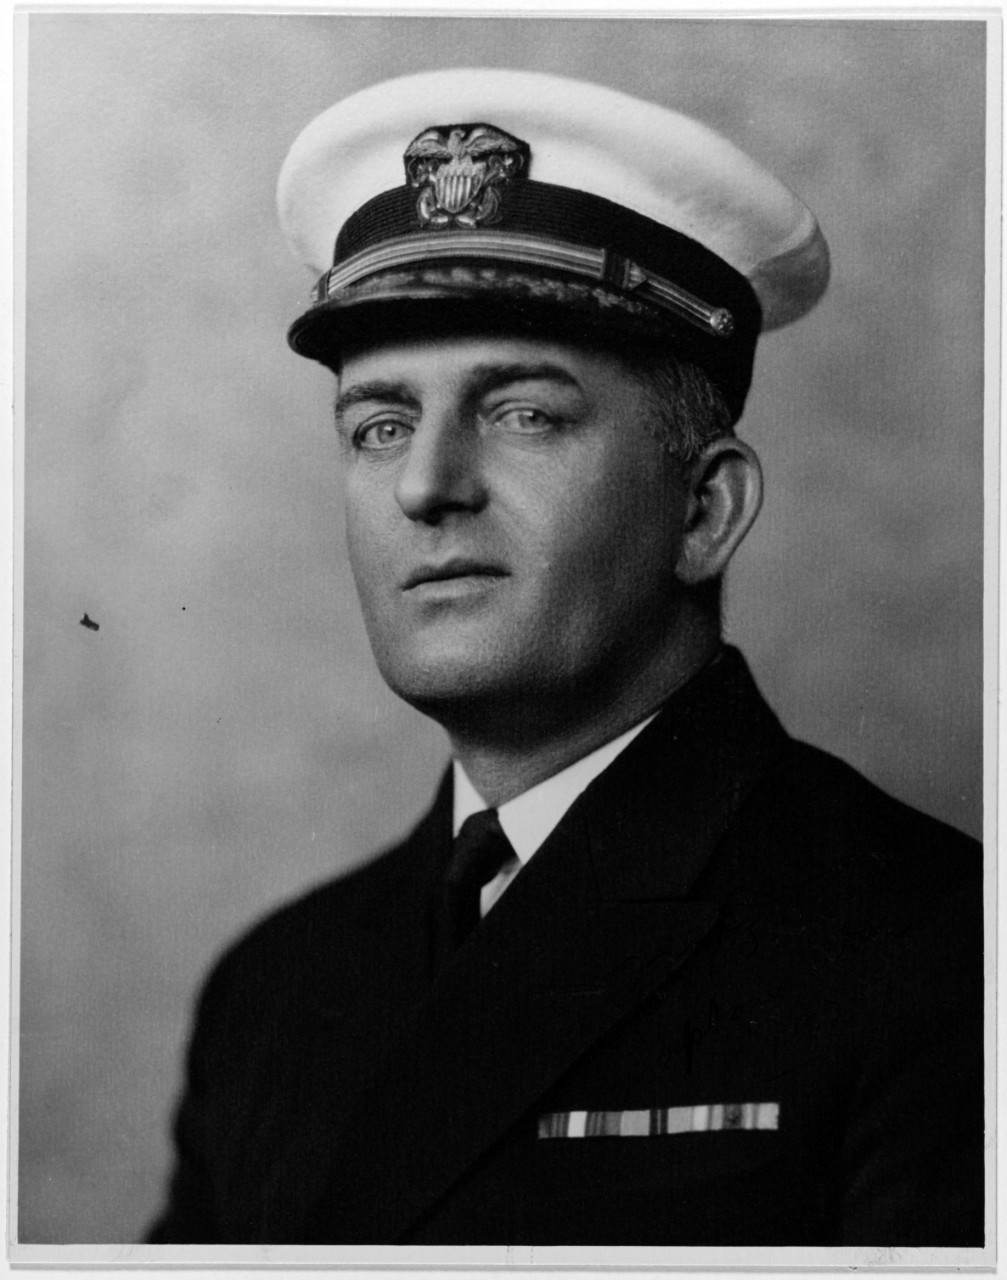 Captain Fred H. Poteet, USN